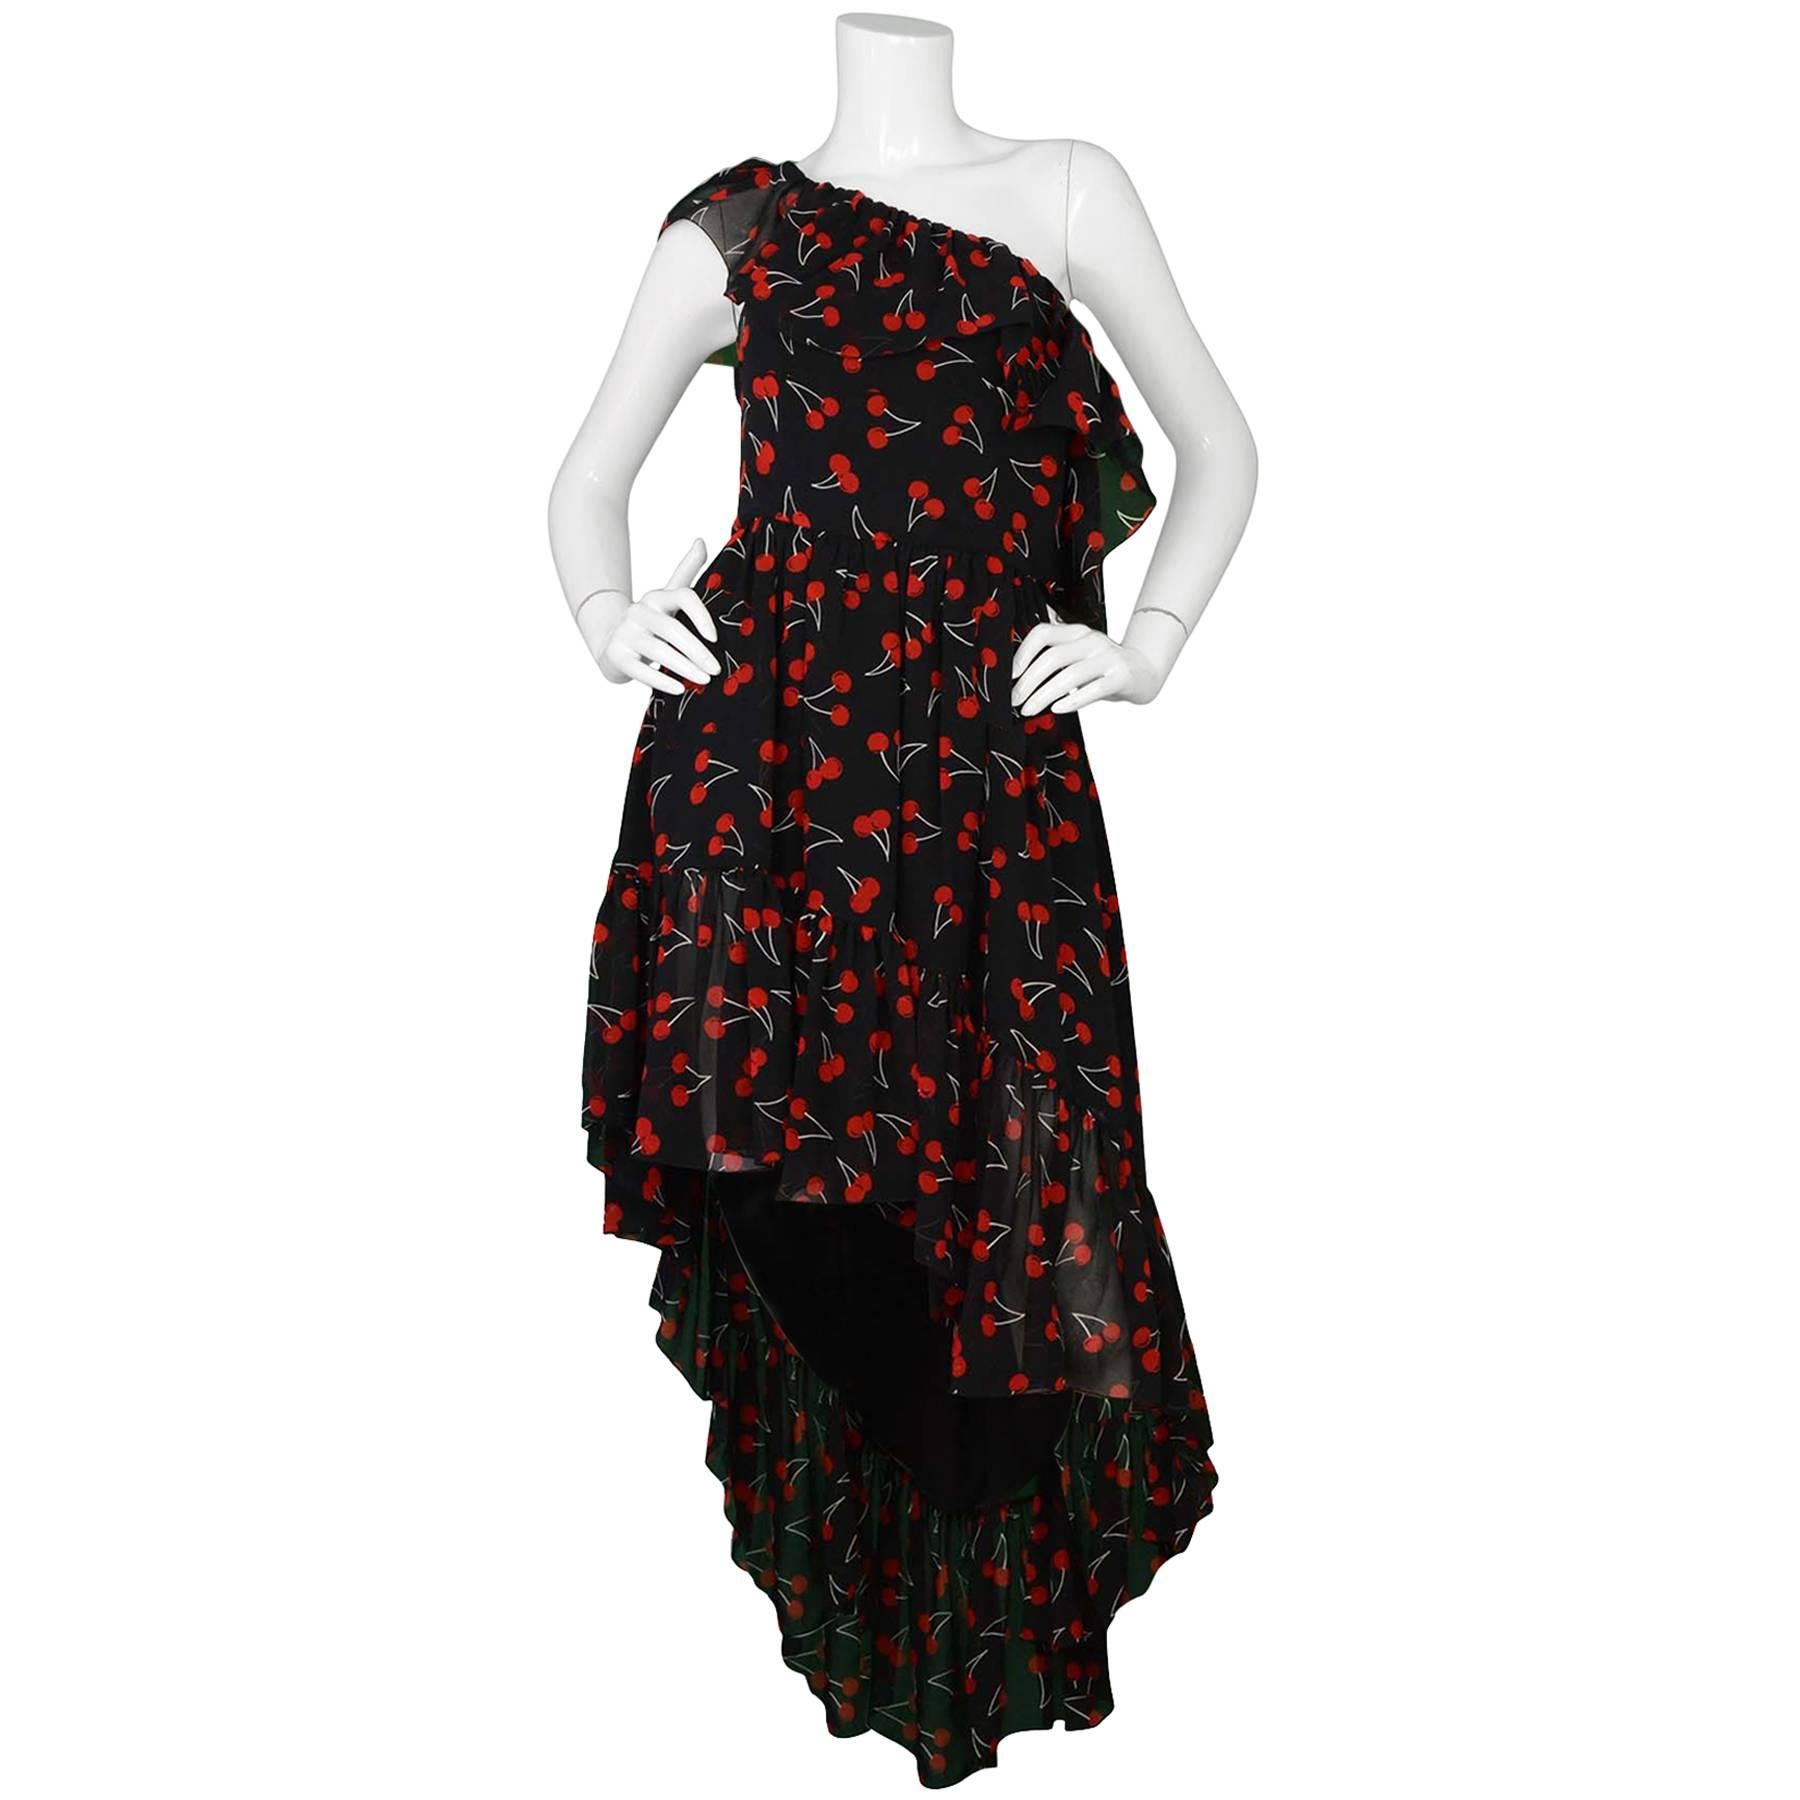 Saint Laurent 2016 Black and Red Silk Cherry Print Dress Sz 40 rt. $3, 79